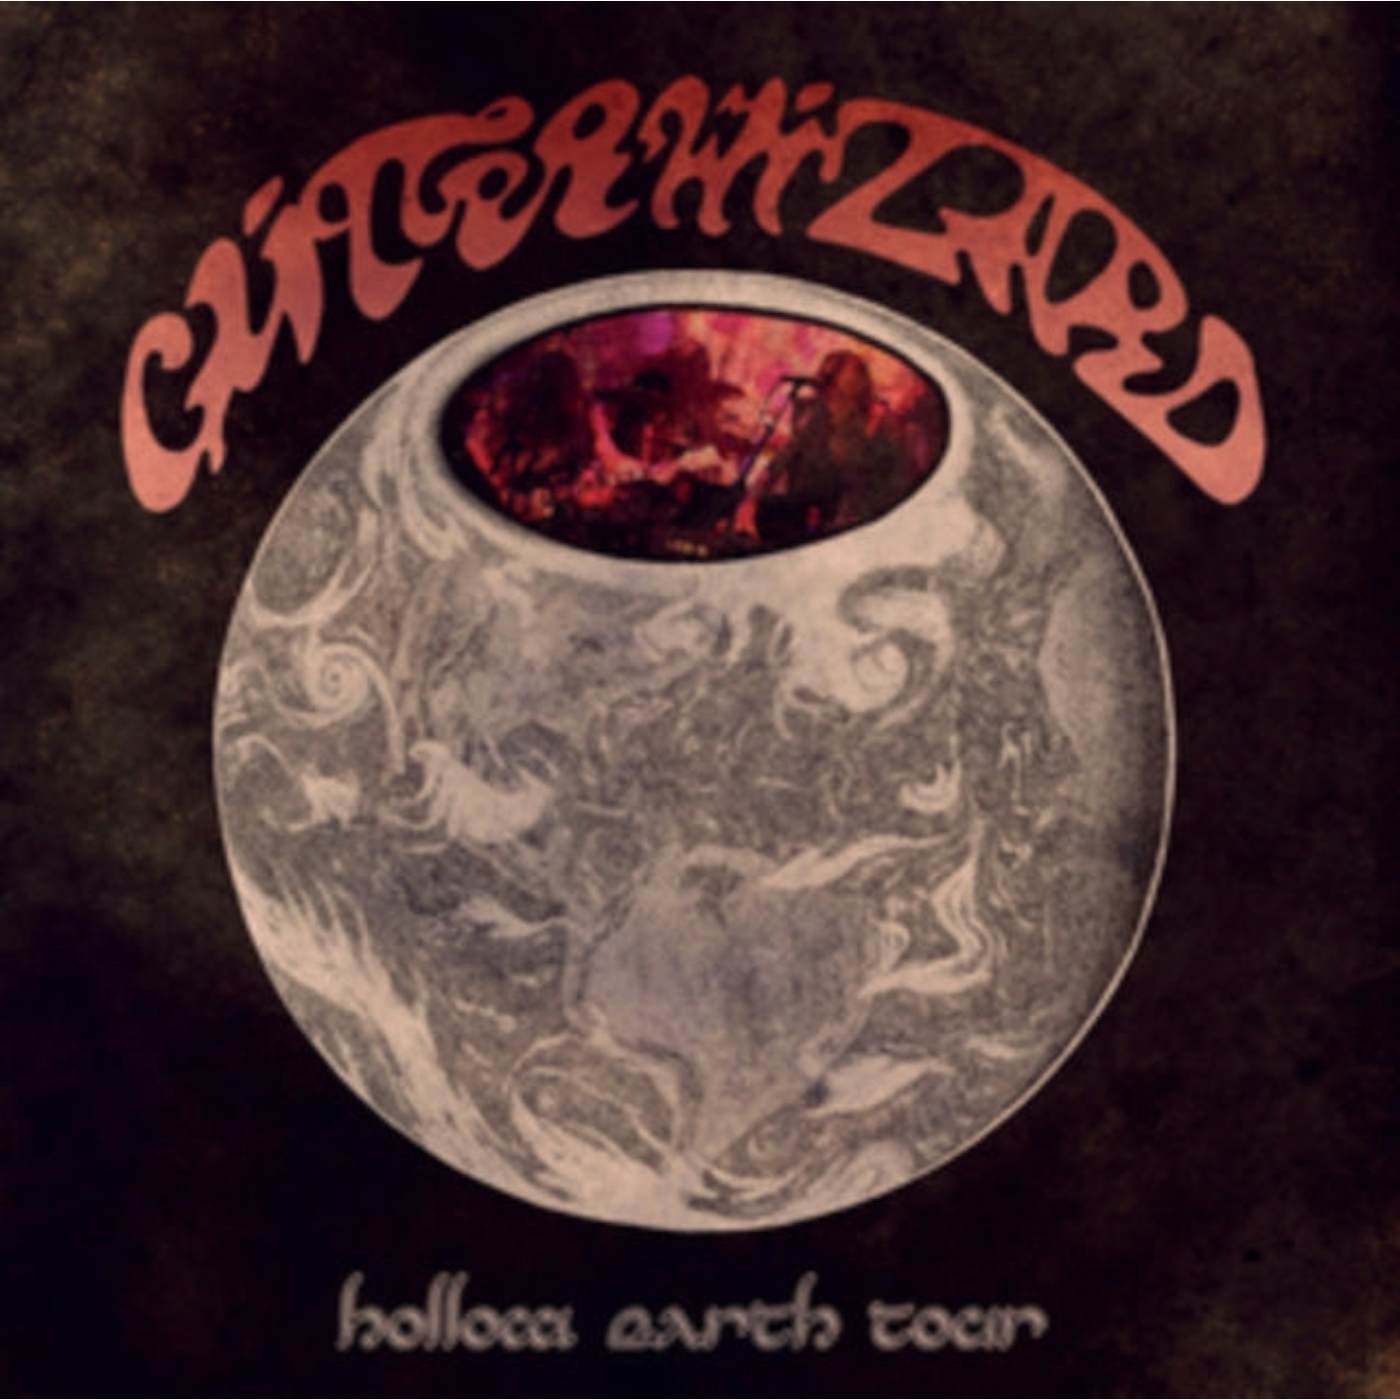 Glitter Wizard CD - Hollow Earth Tour